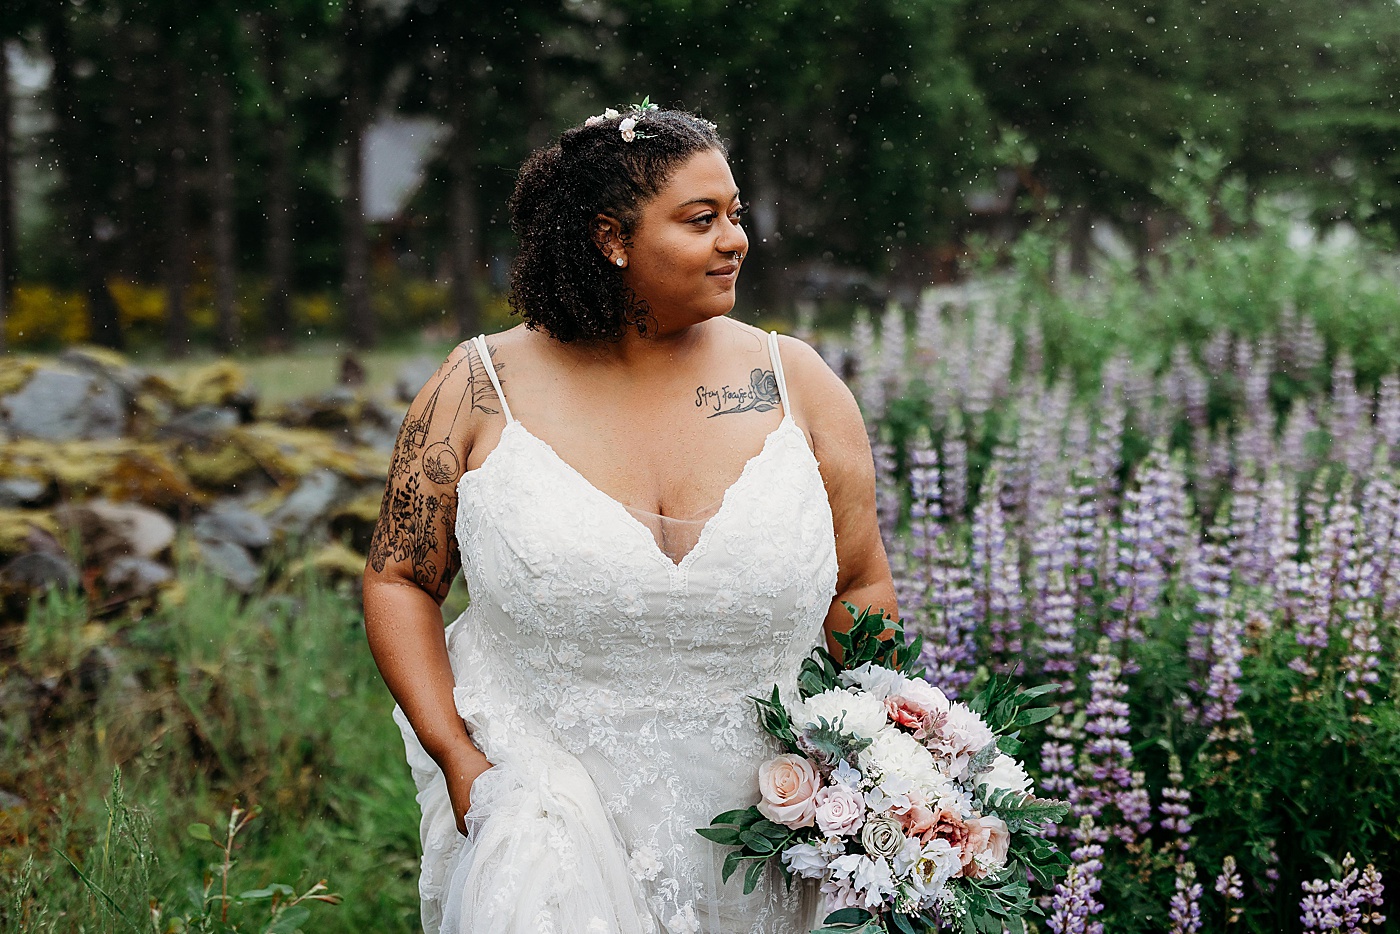 Bridal portraits | Photo by Megan Montalvo Photography